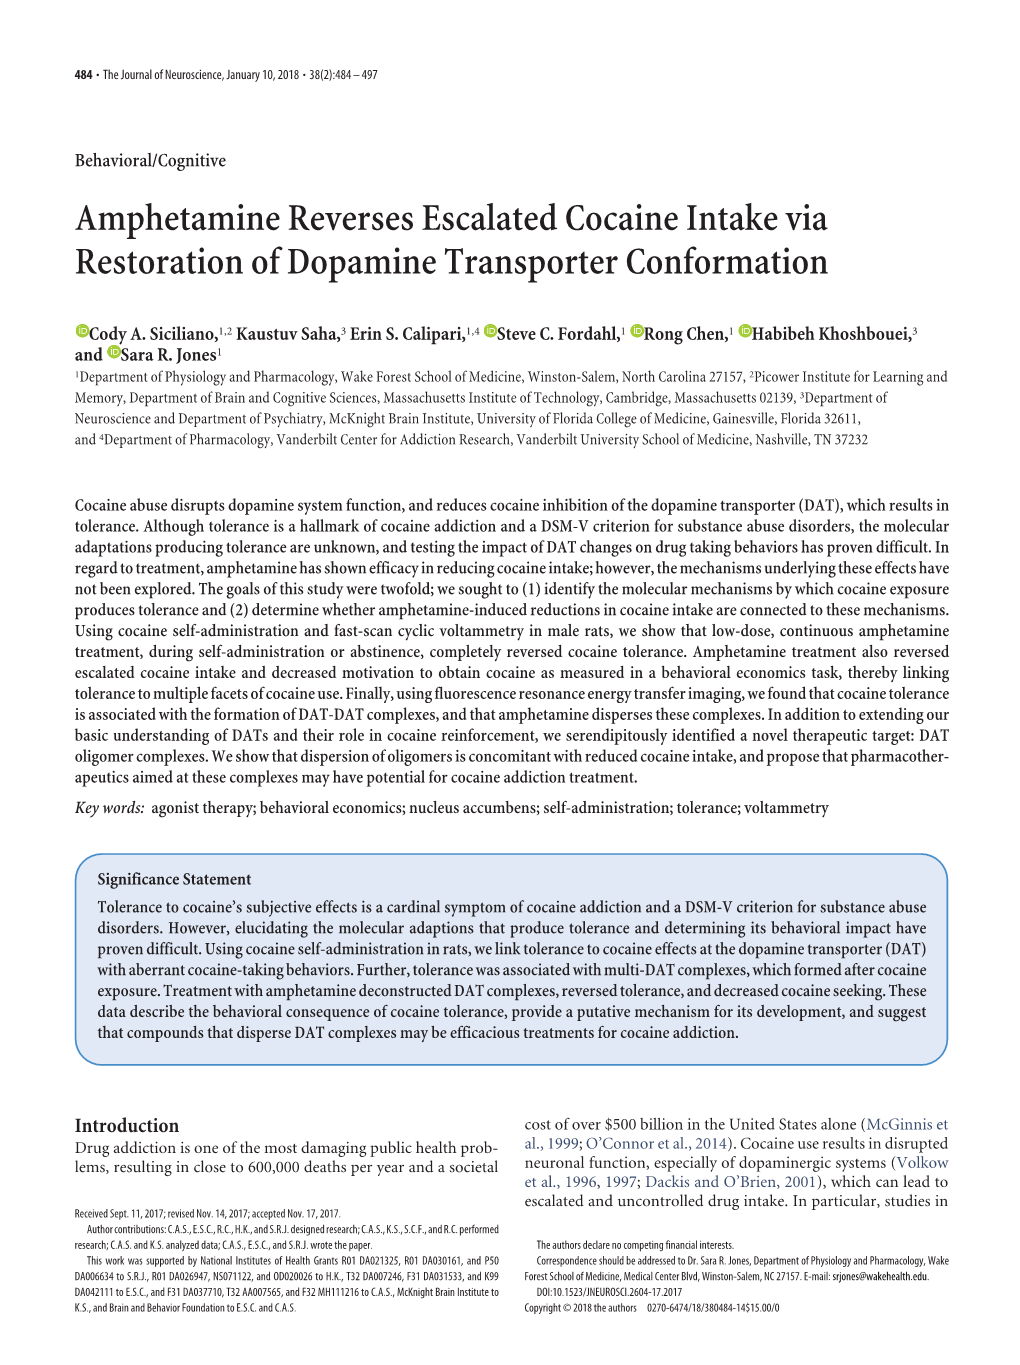 Amphetamine Reverses Escalated Cocaine Intake Via Restoration of Dopamine Transporter Conformation